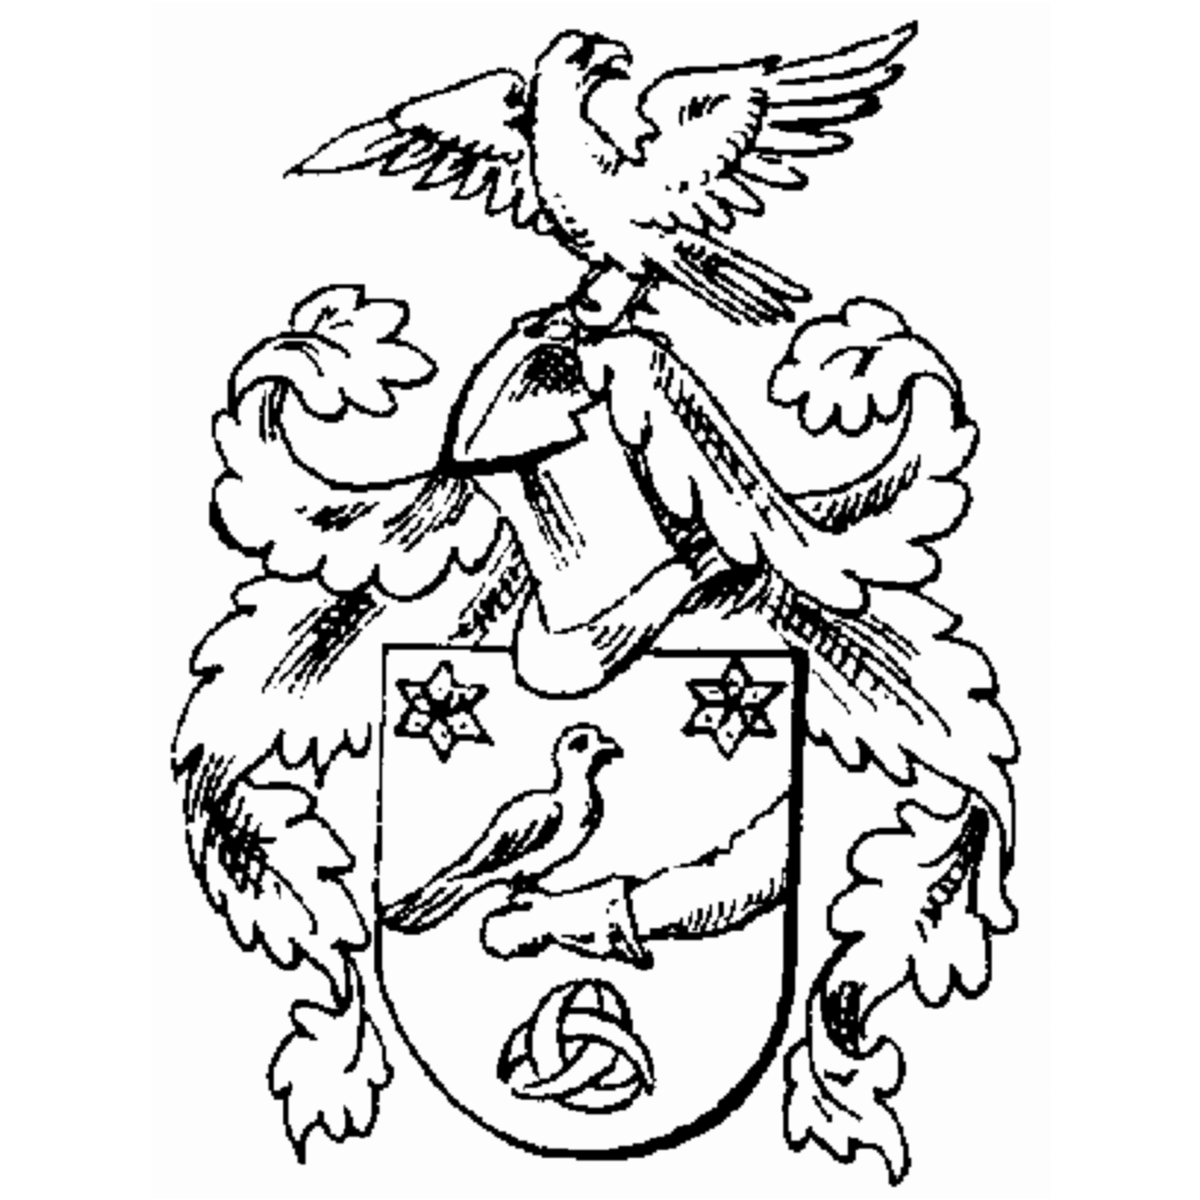 Wappen der Familie Tragbold